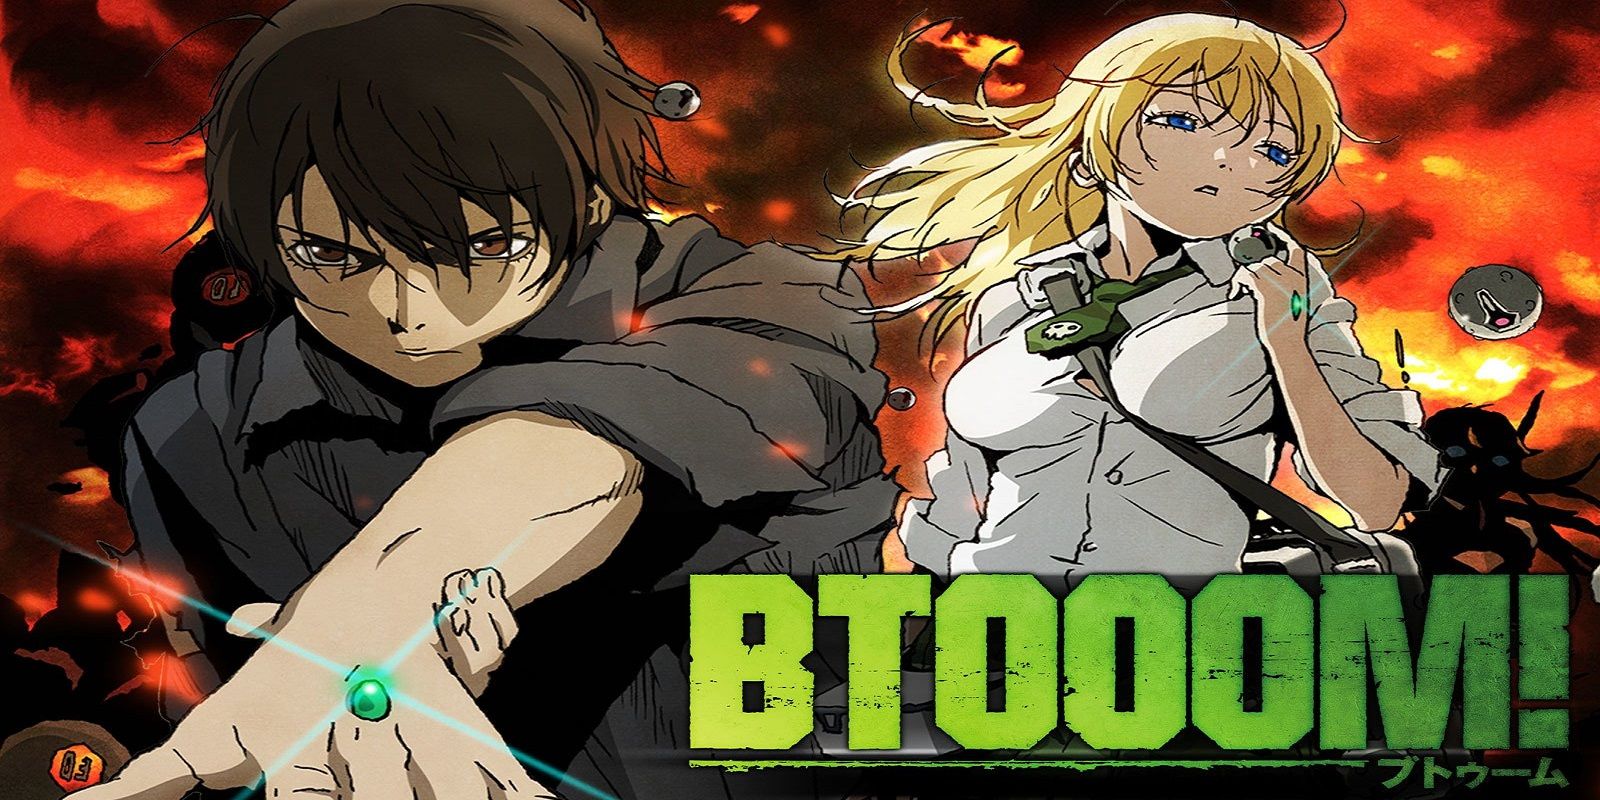 Explosives go off in the Btooom! anime.